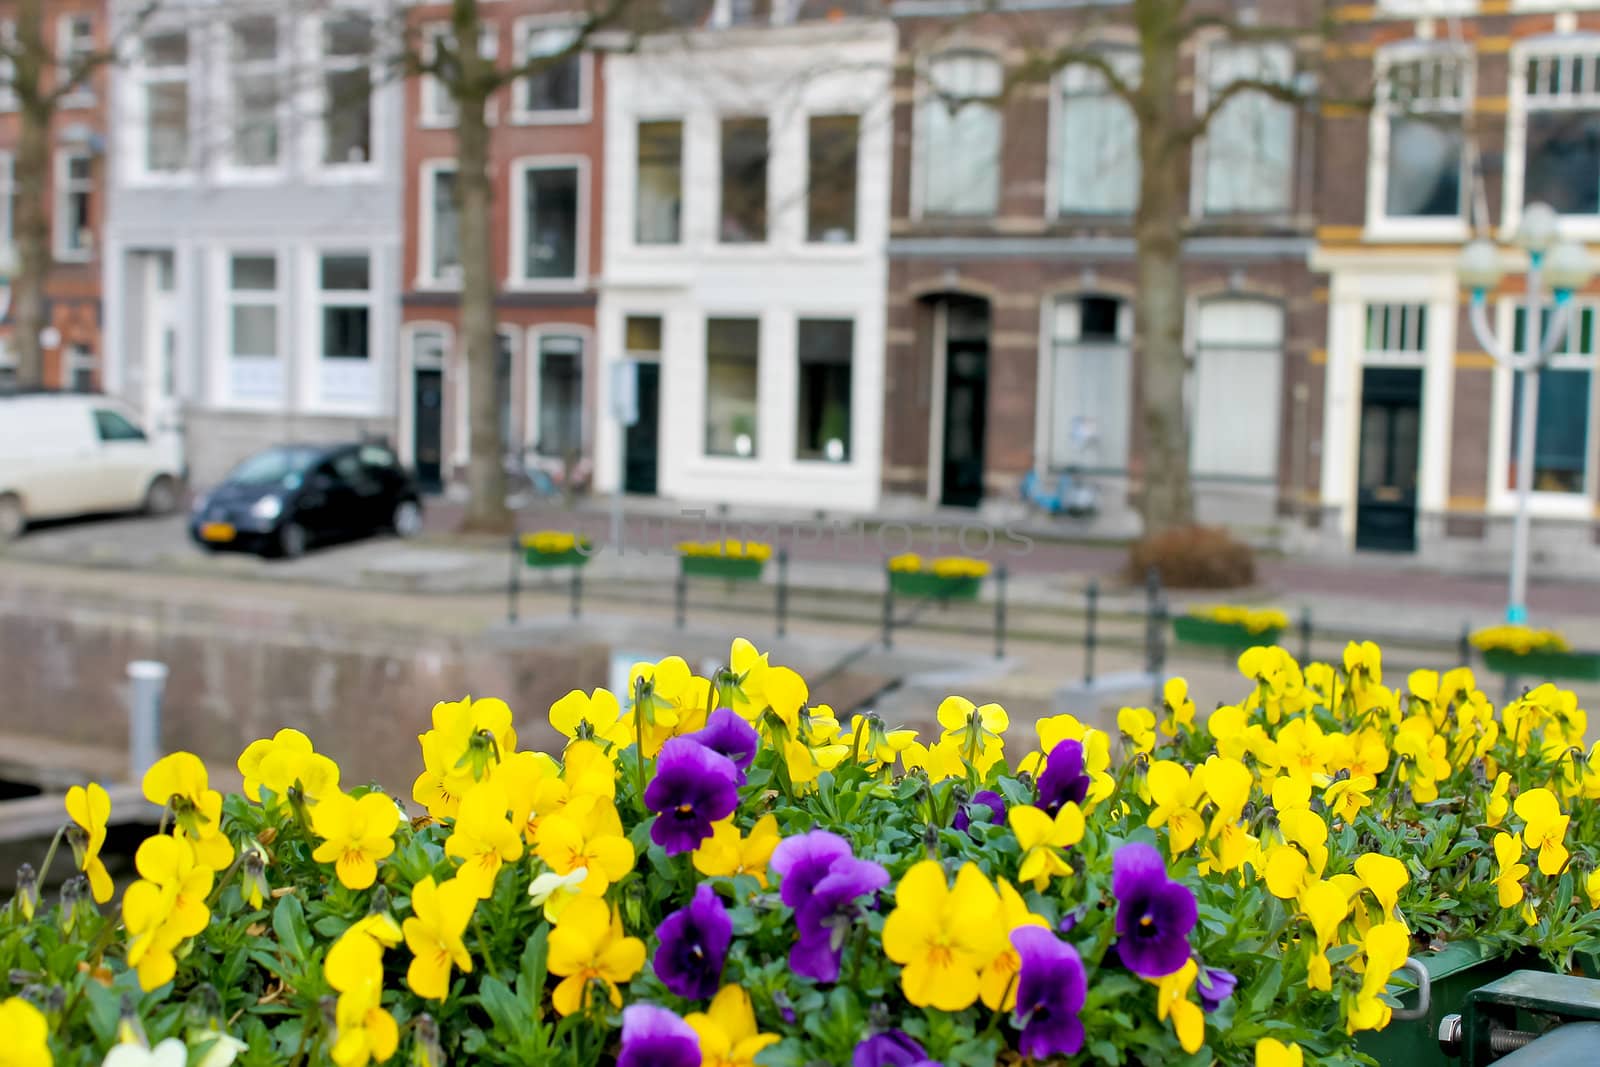 Flowers on the streets of Gorinchem. Netherlands by NickNick